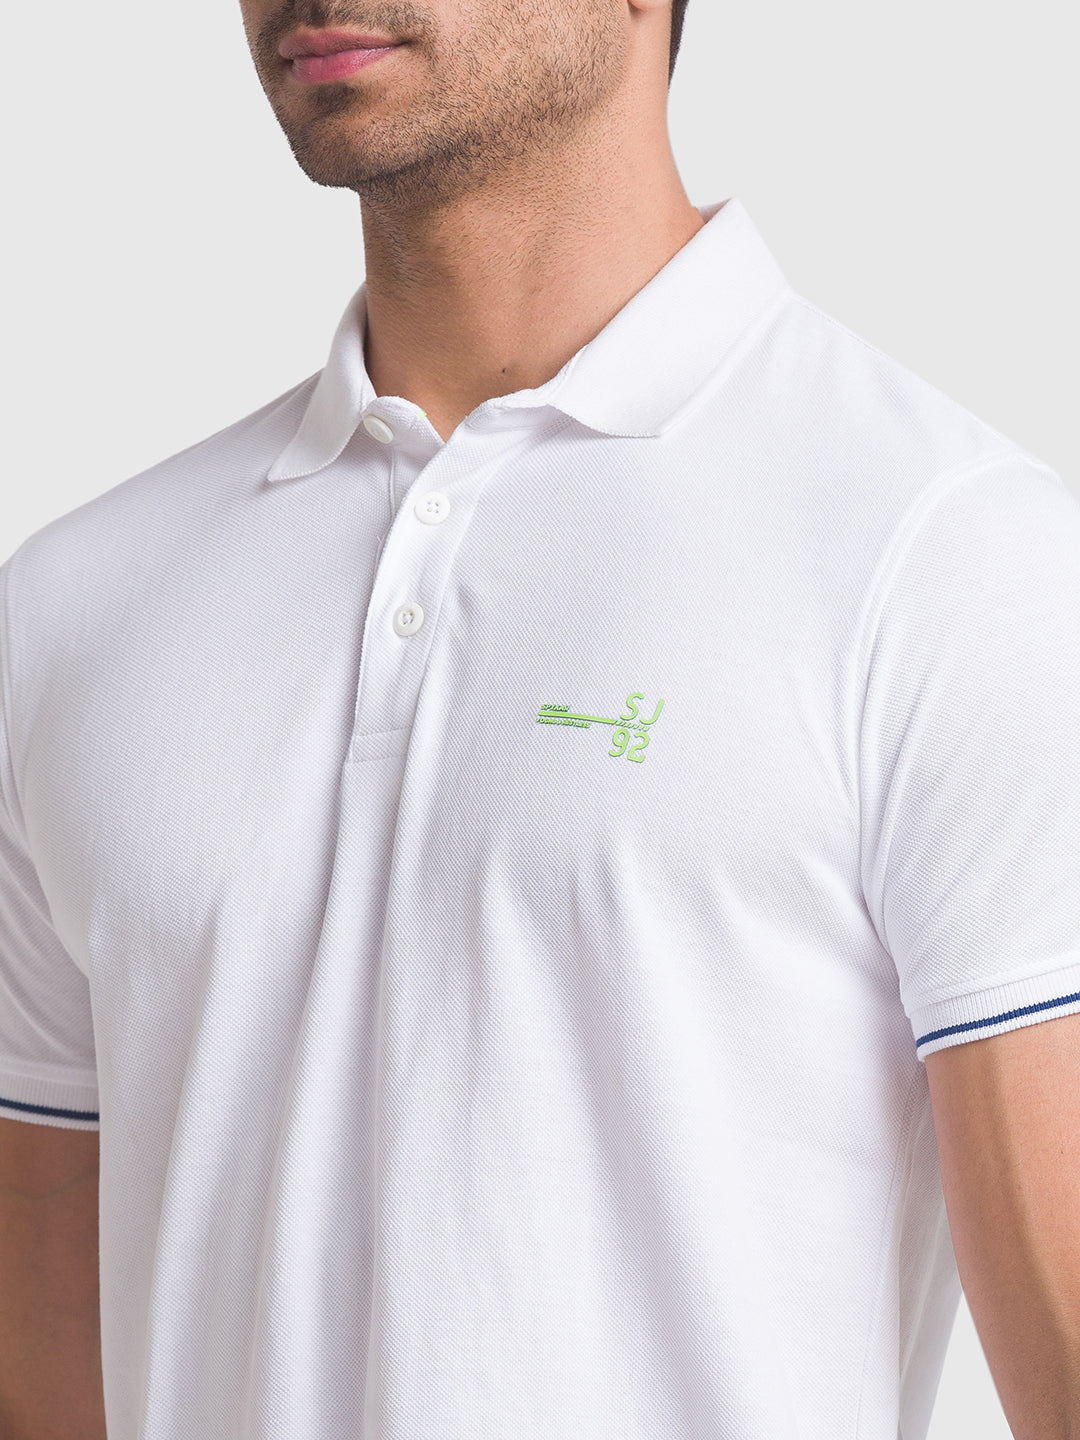 Spykar White Cotton Half Sleeve Plain Casual Polo T-Shirt For Men